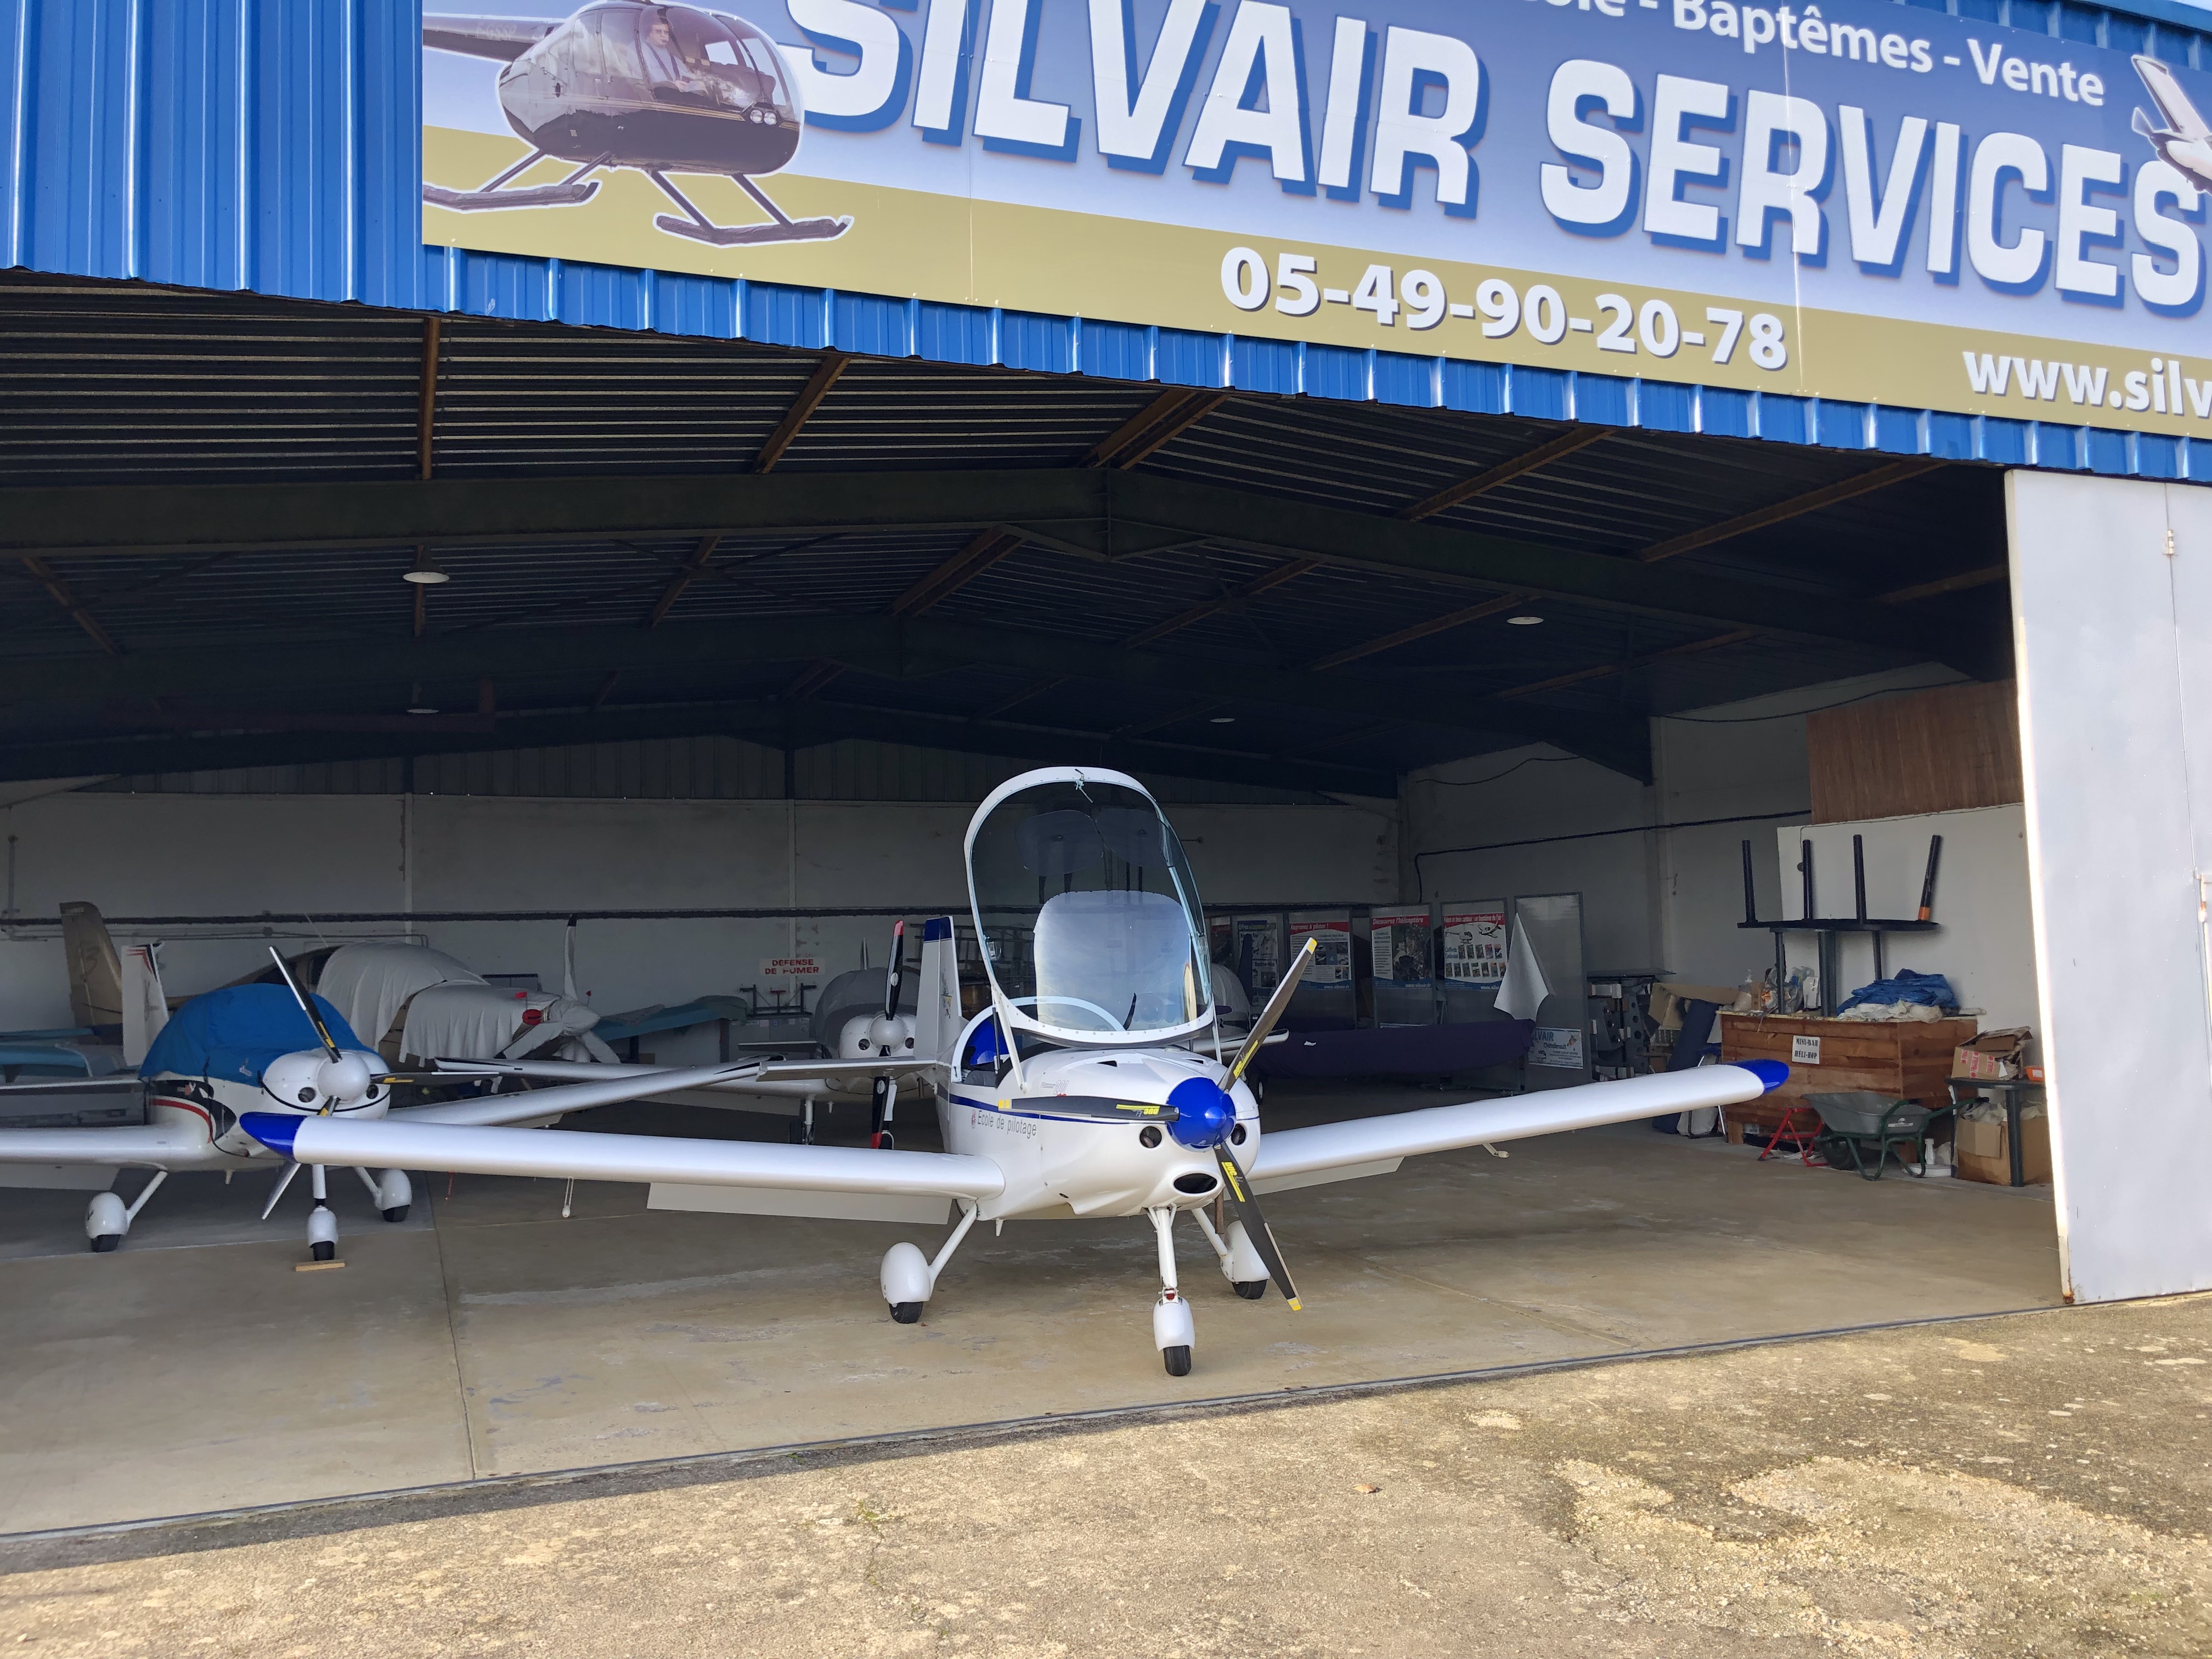 Silvair Services